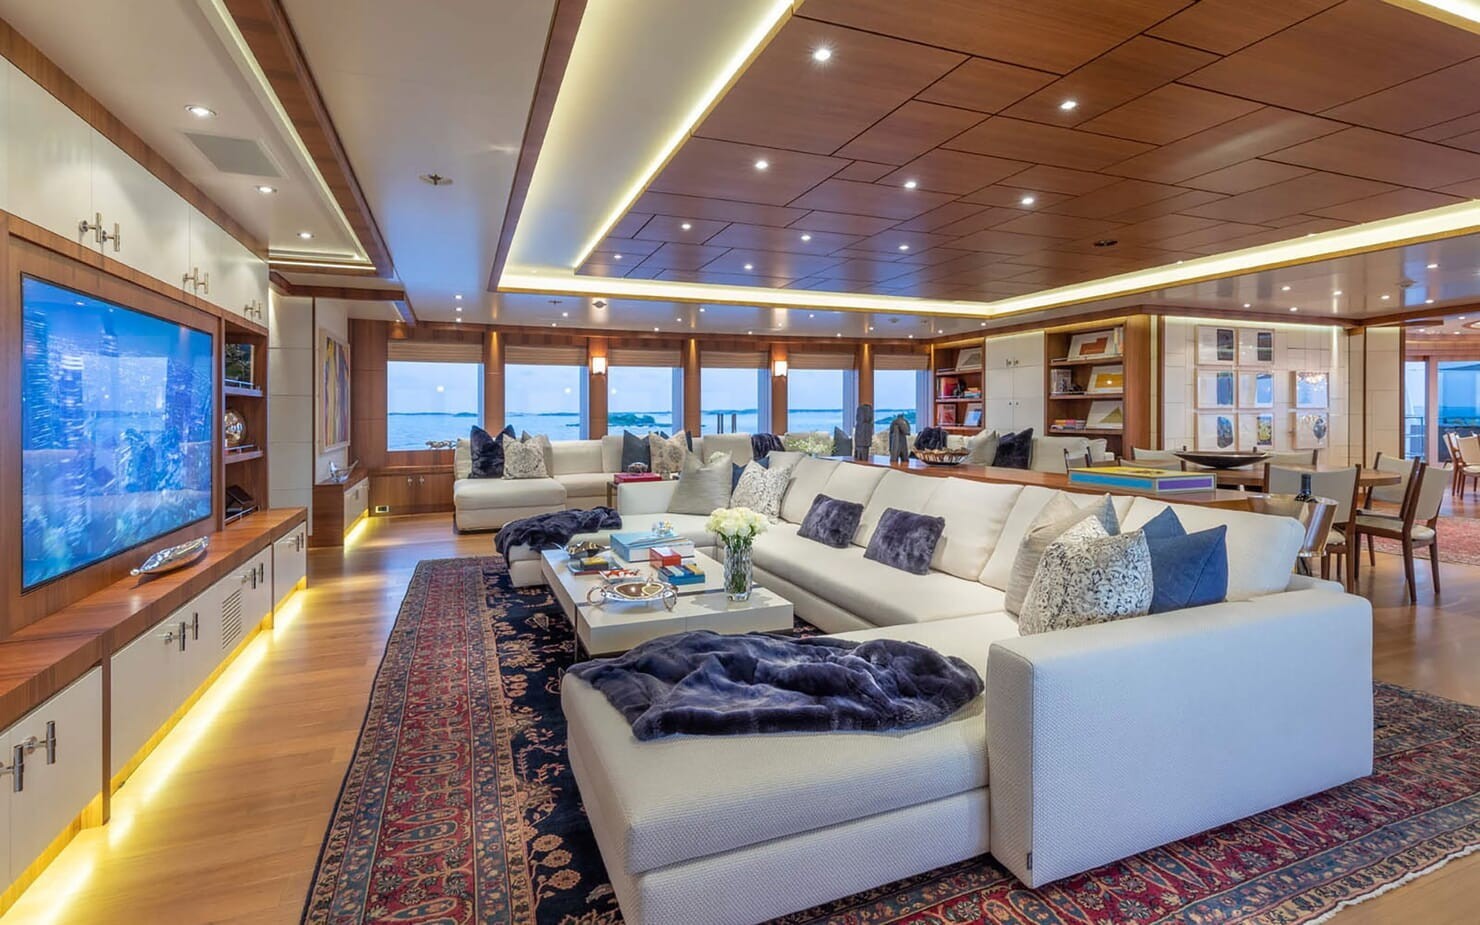 MAN OF STEEL Yacht • Barry Zekelman $150M Superyacht